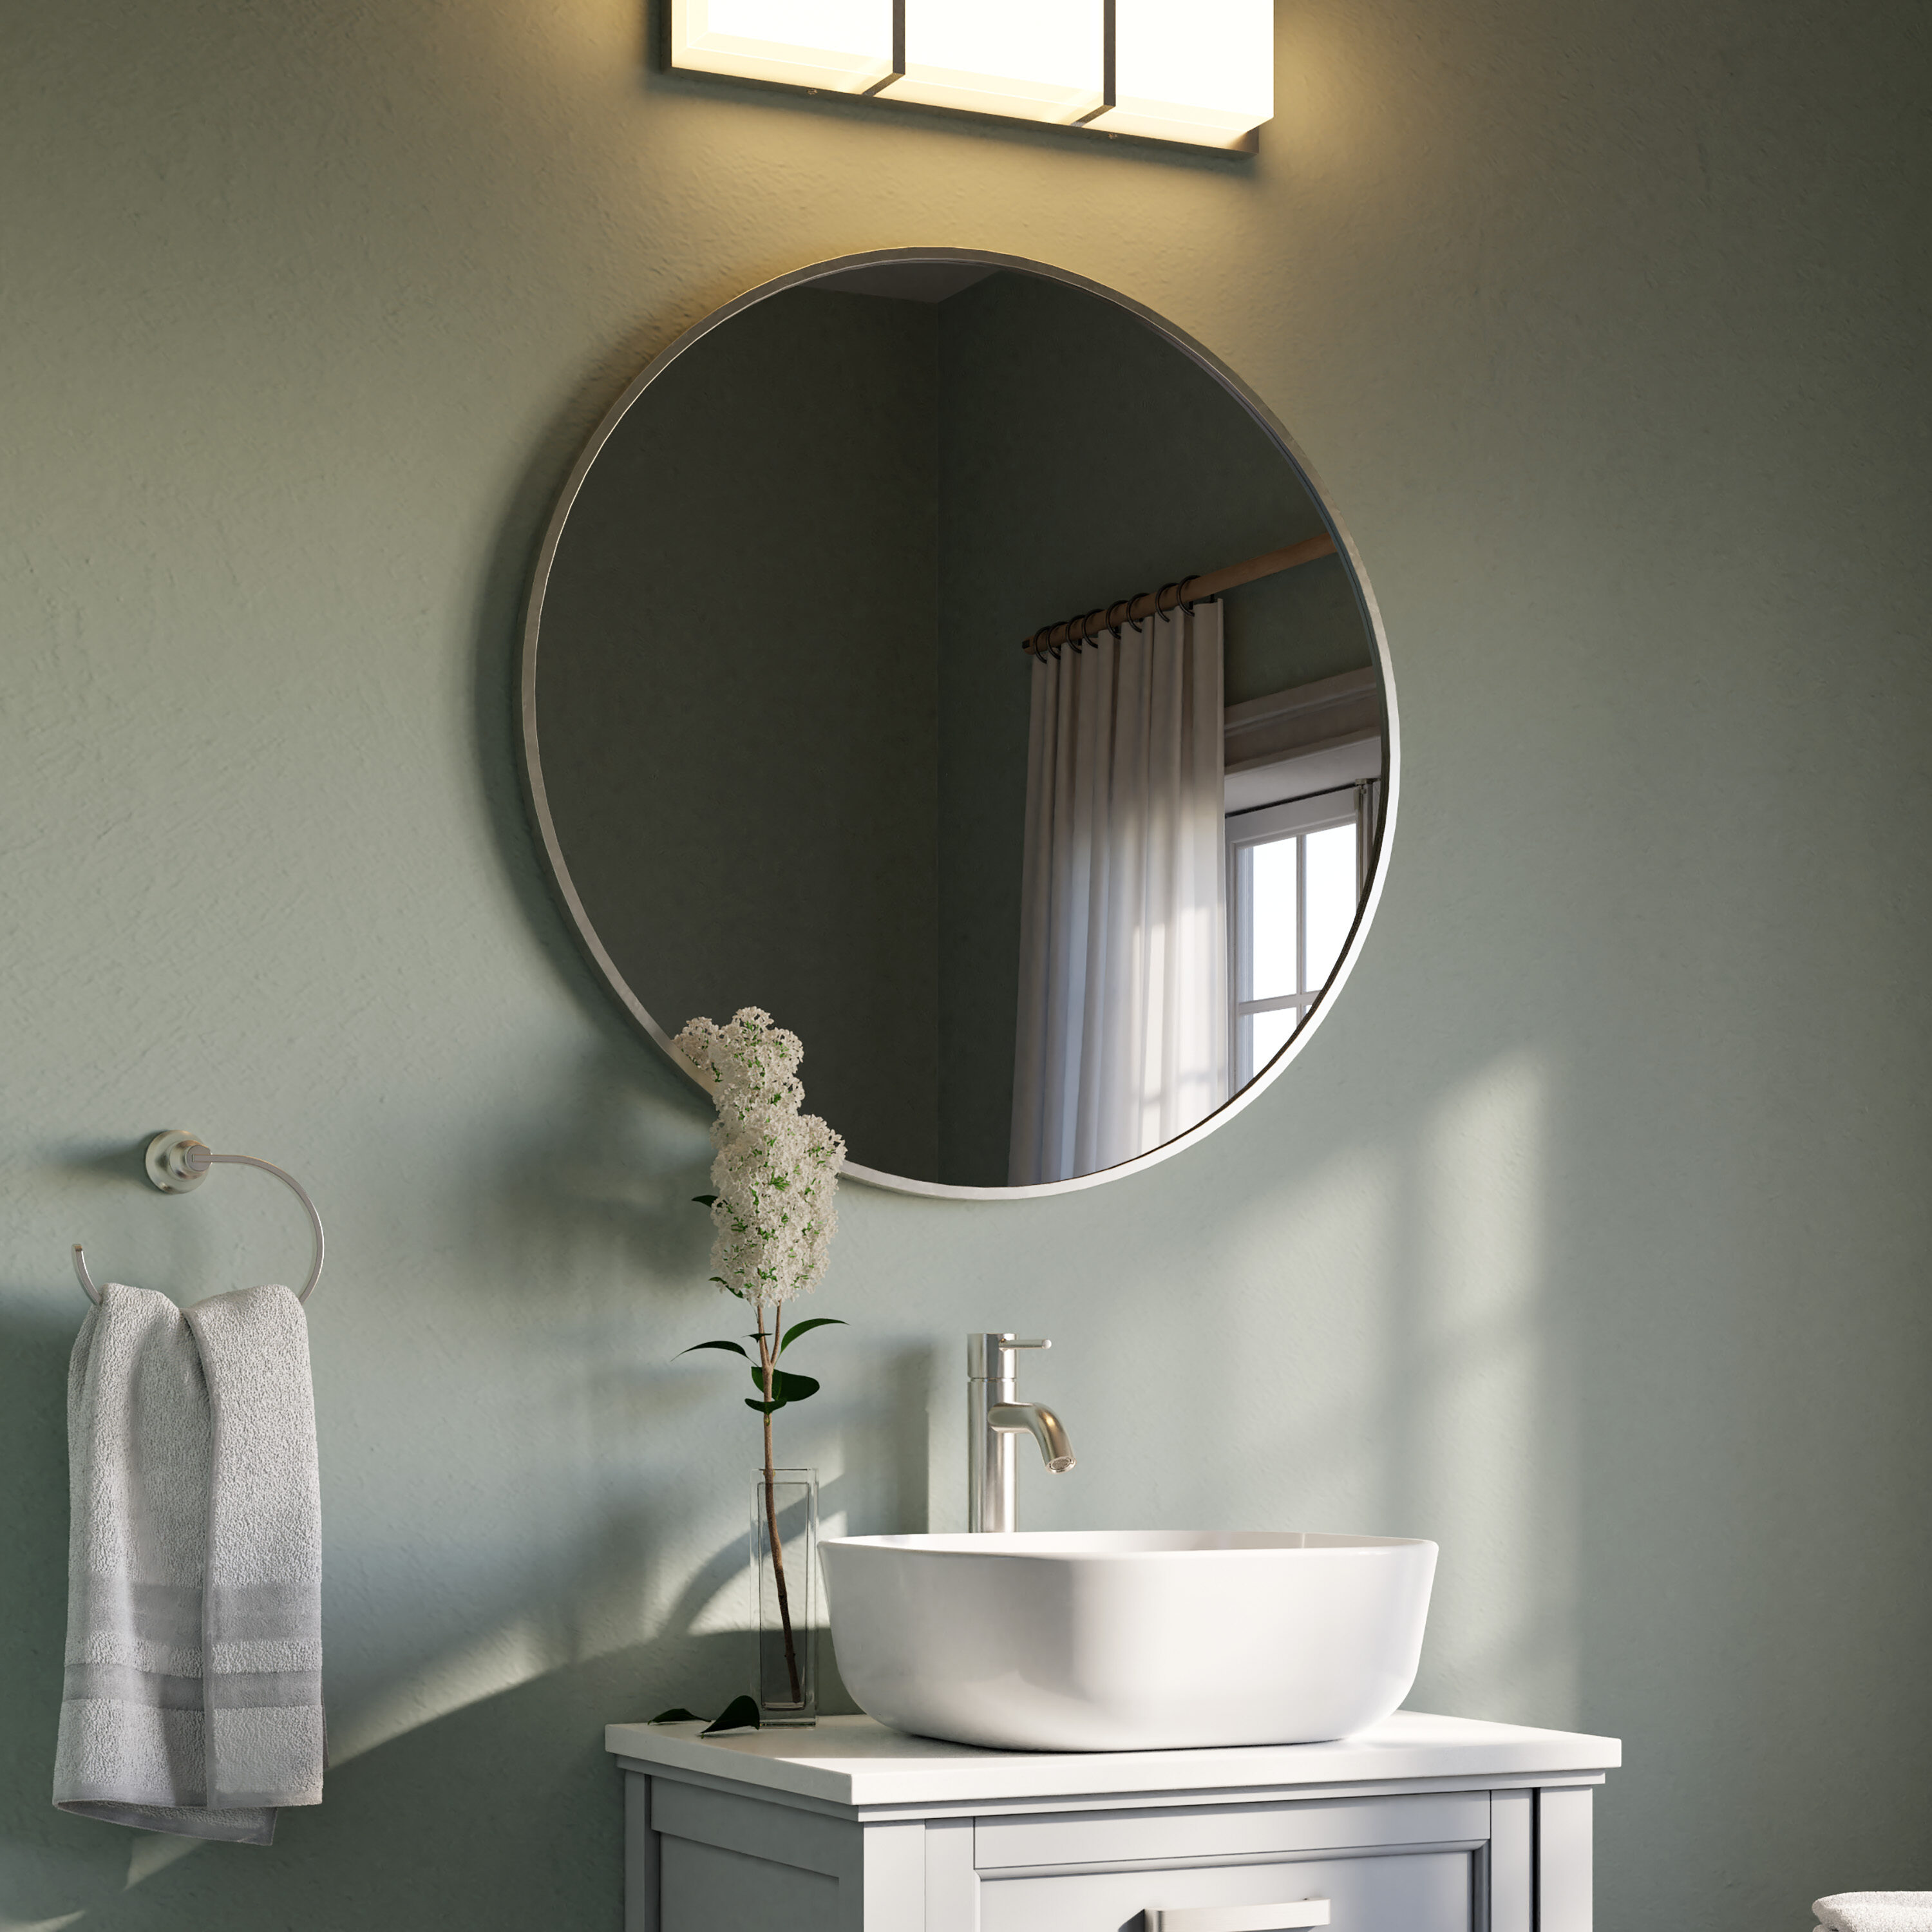 Bathroom mirror cabinet - household items - by owner - housewares sale -  craigslist